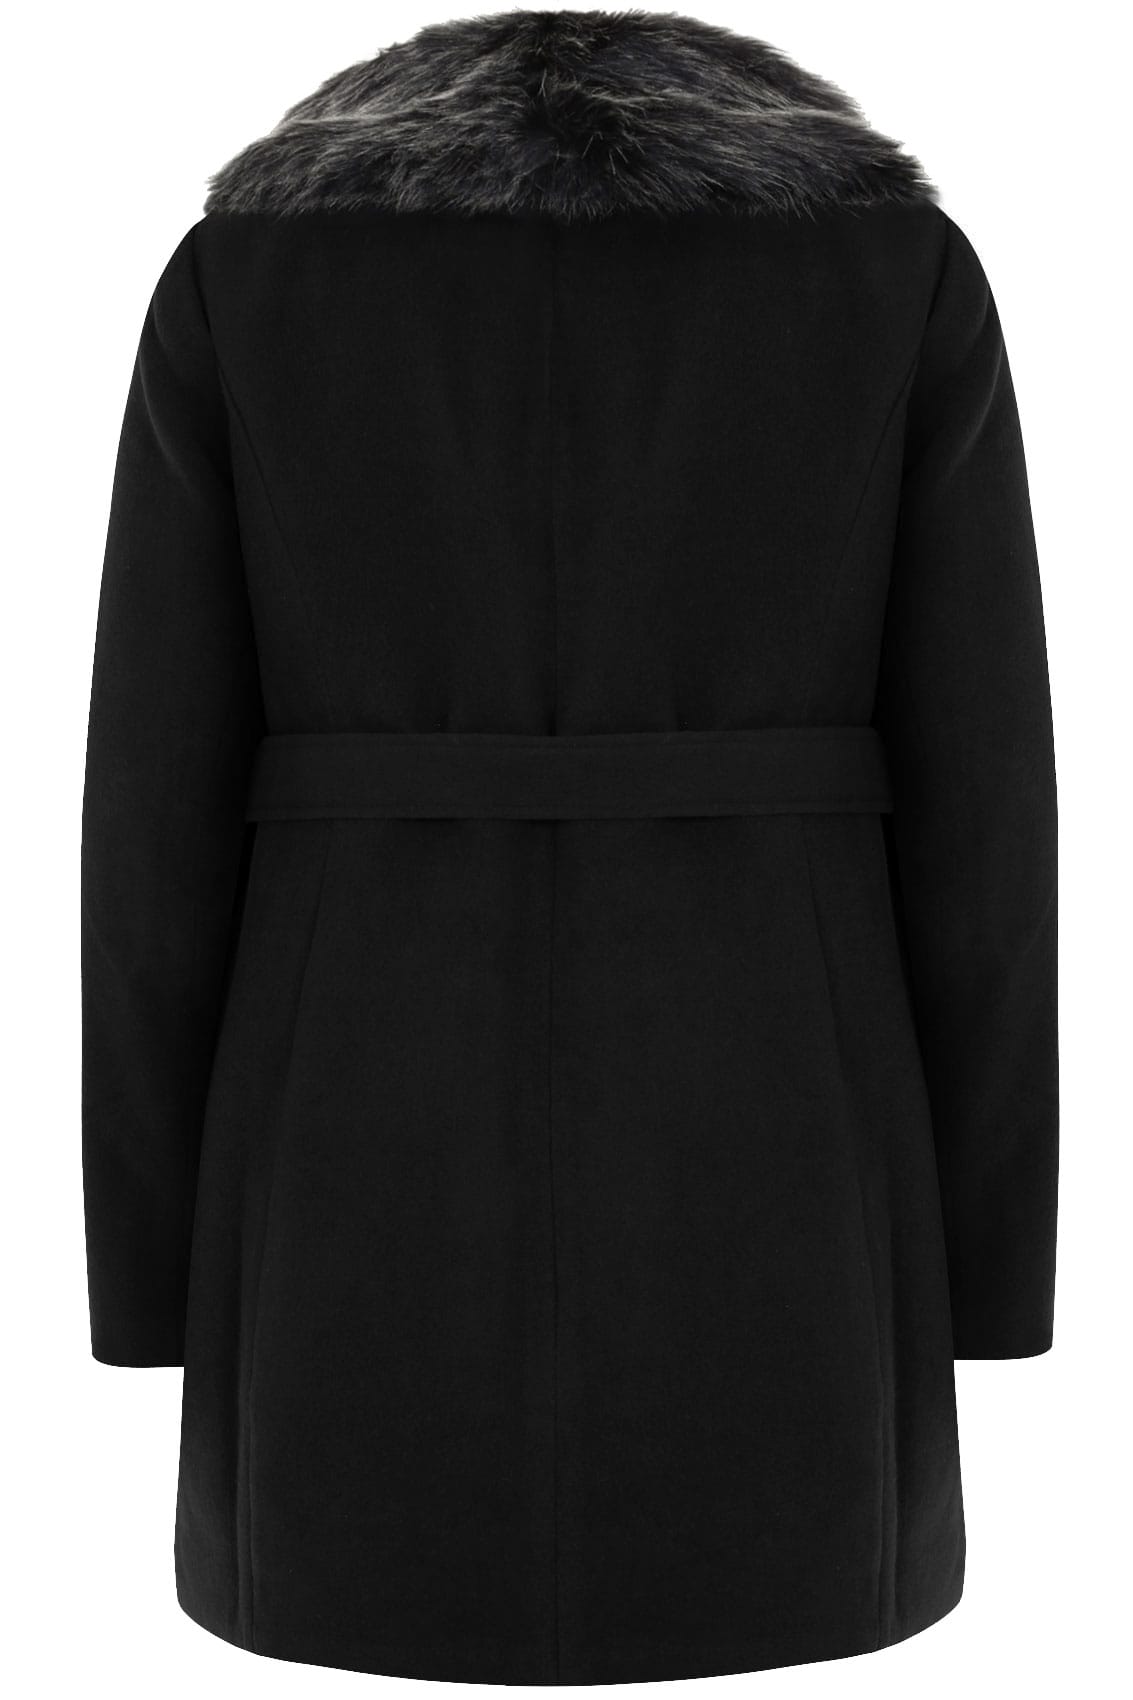 Black Coat With Faux Fur Collar & Tie Waist, Plus size 16 to 36